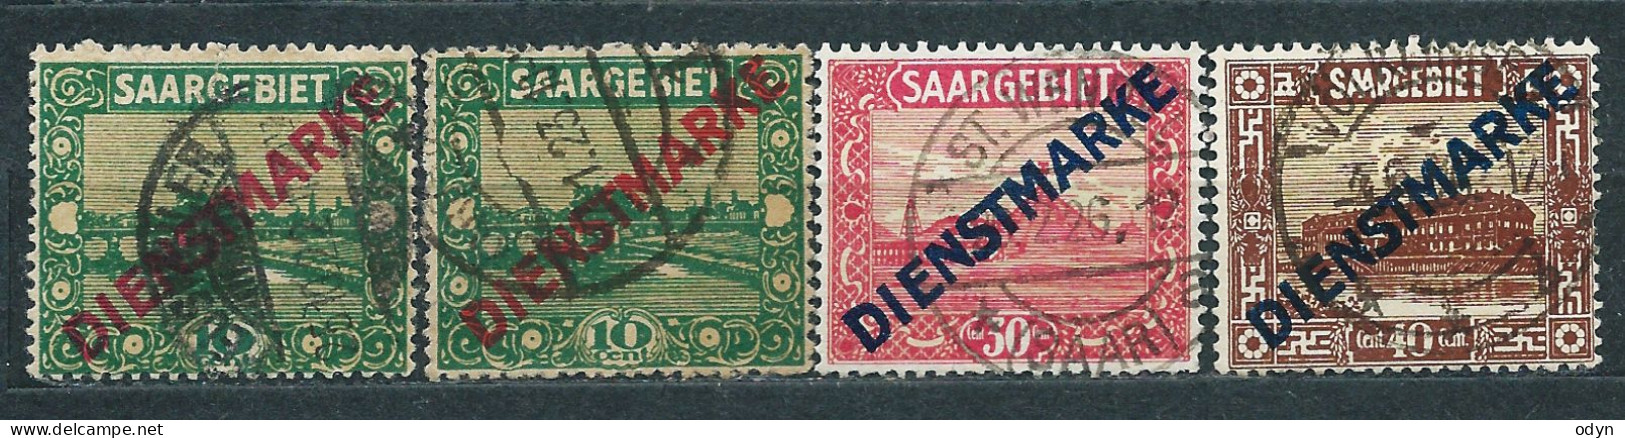 Saargebiet Dienstmarken 1922, Complete Set MiNr 1-11 - Unused MH * + 4 Stamps Used - Officials